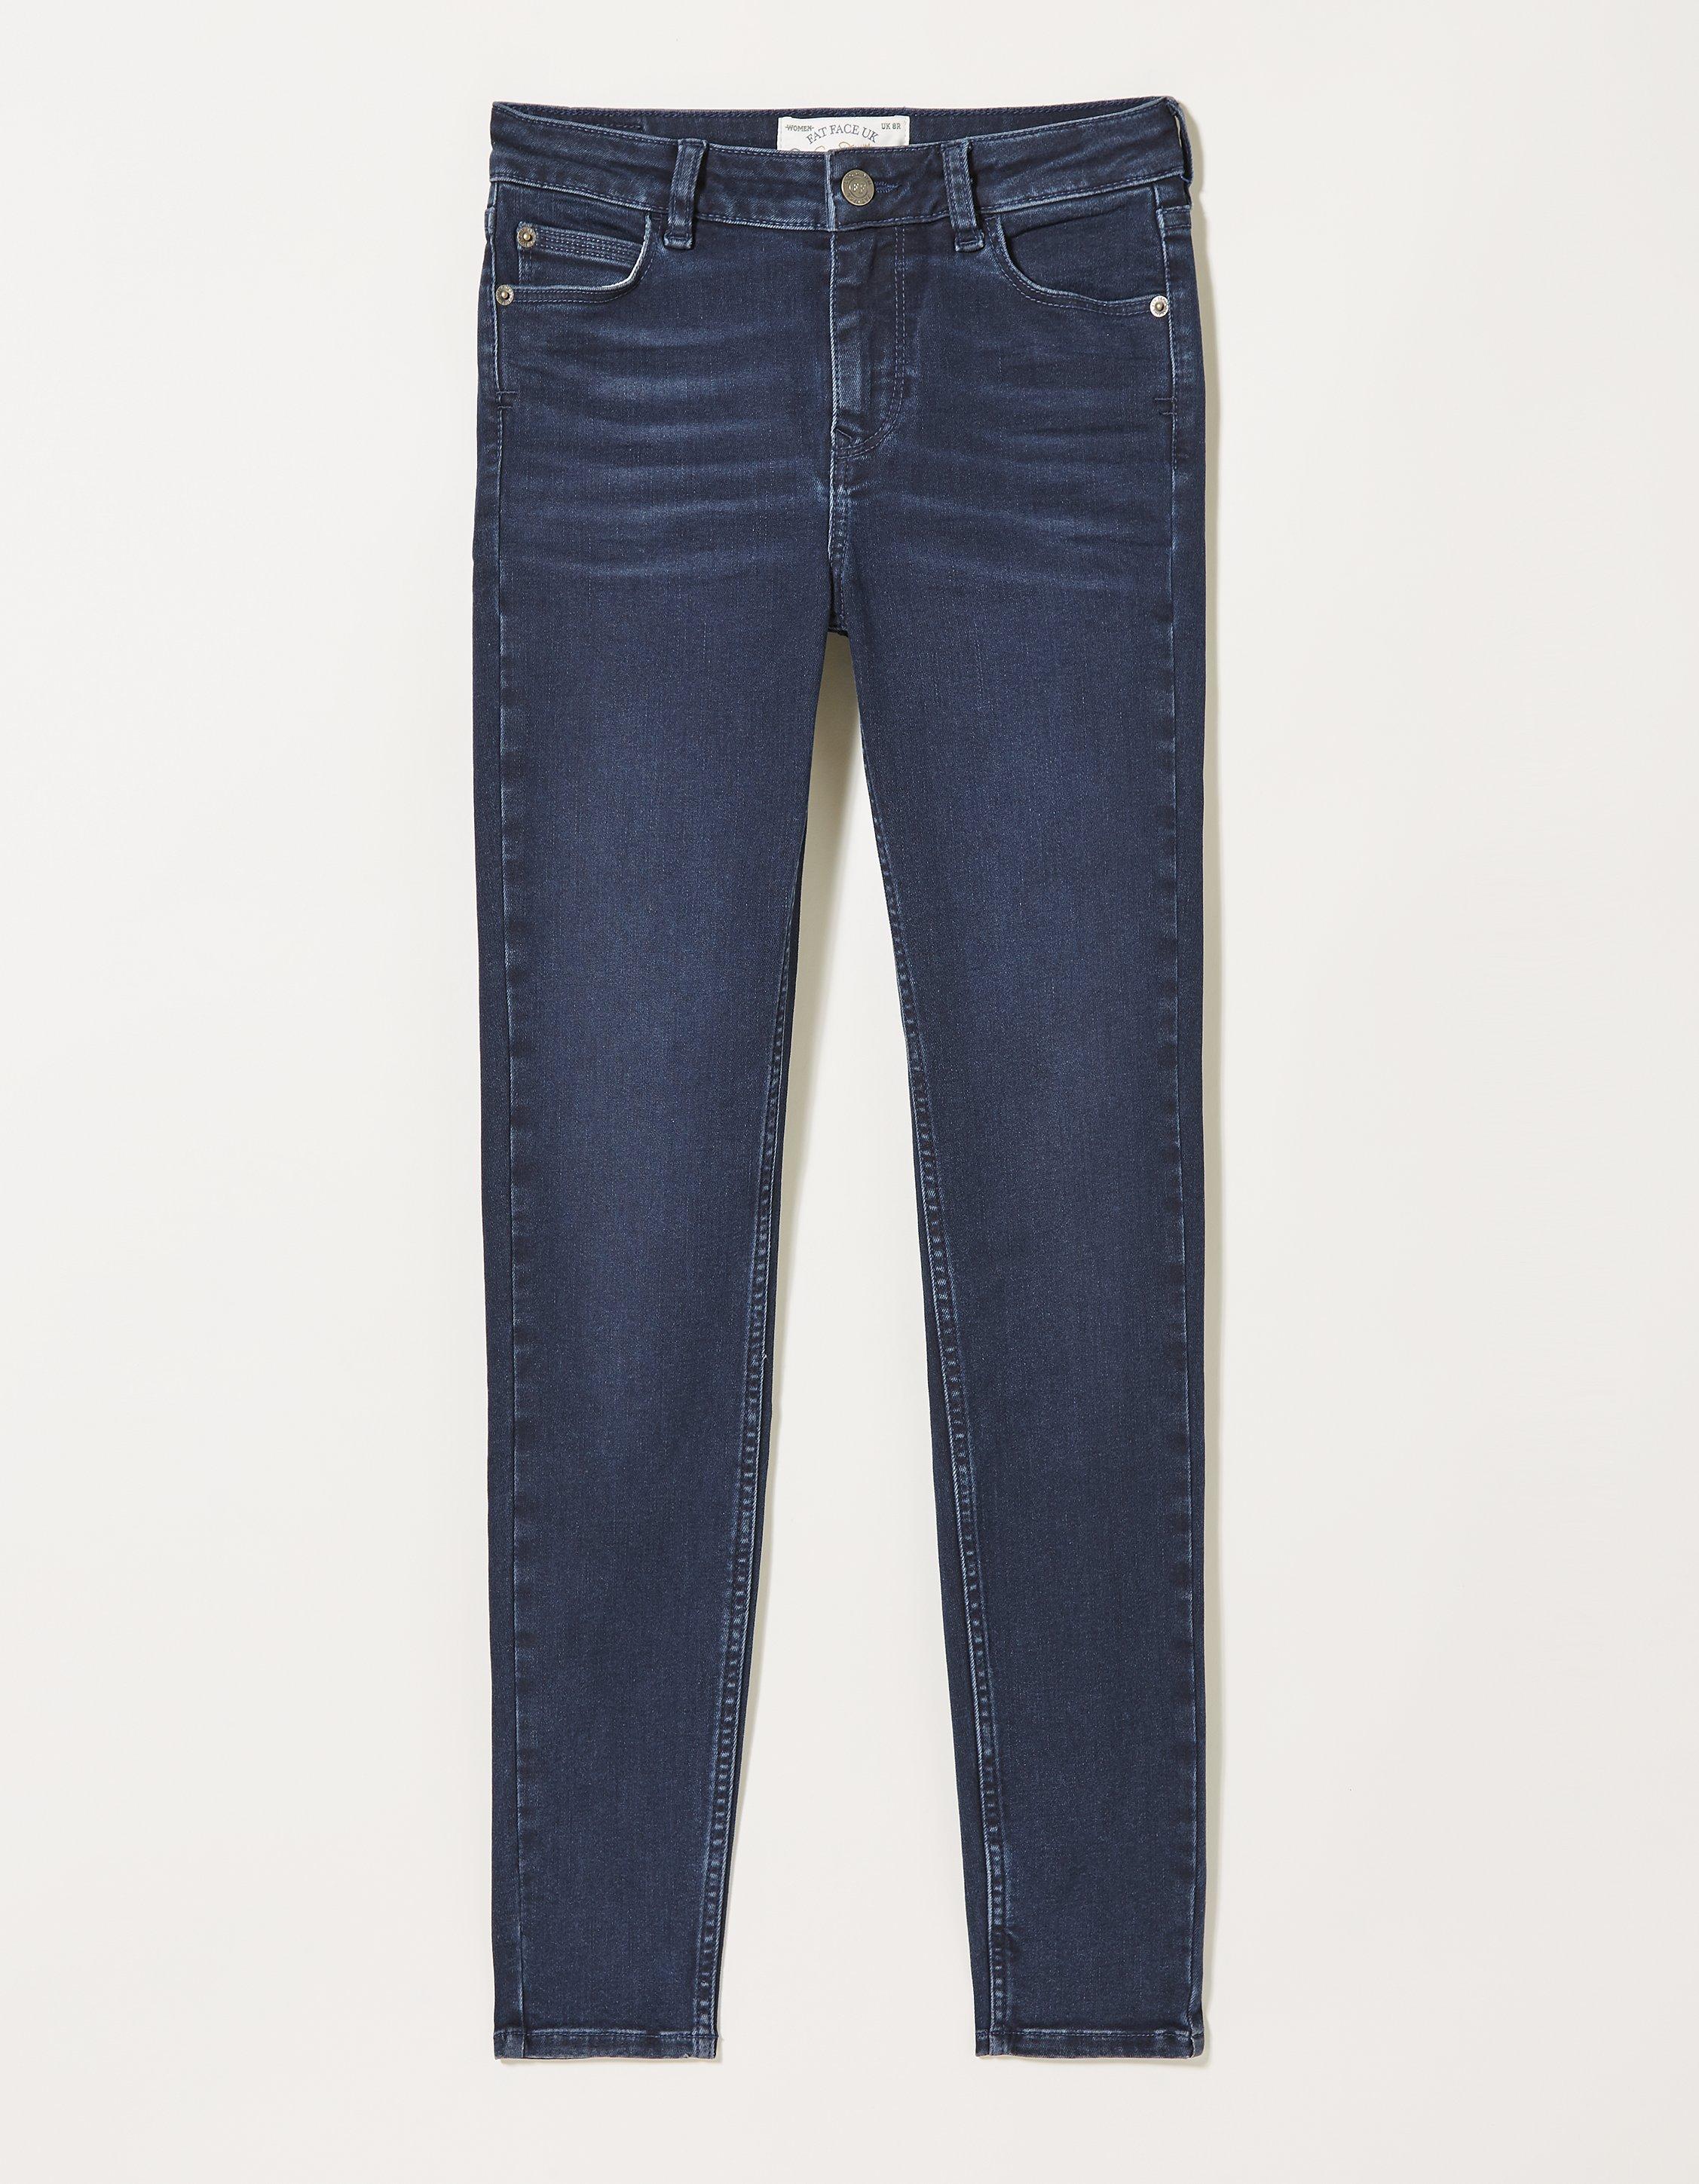 H&M Feather Soft Low Jeggings  Mid rise jeans, Blue denim pants, Denim  jeggings